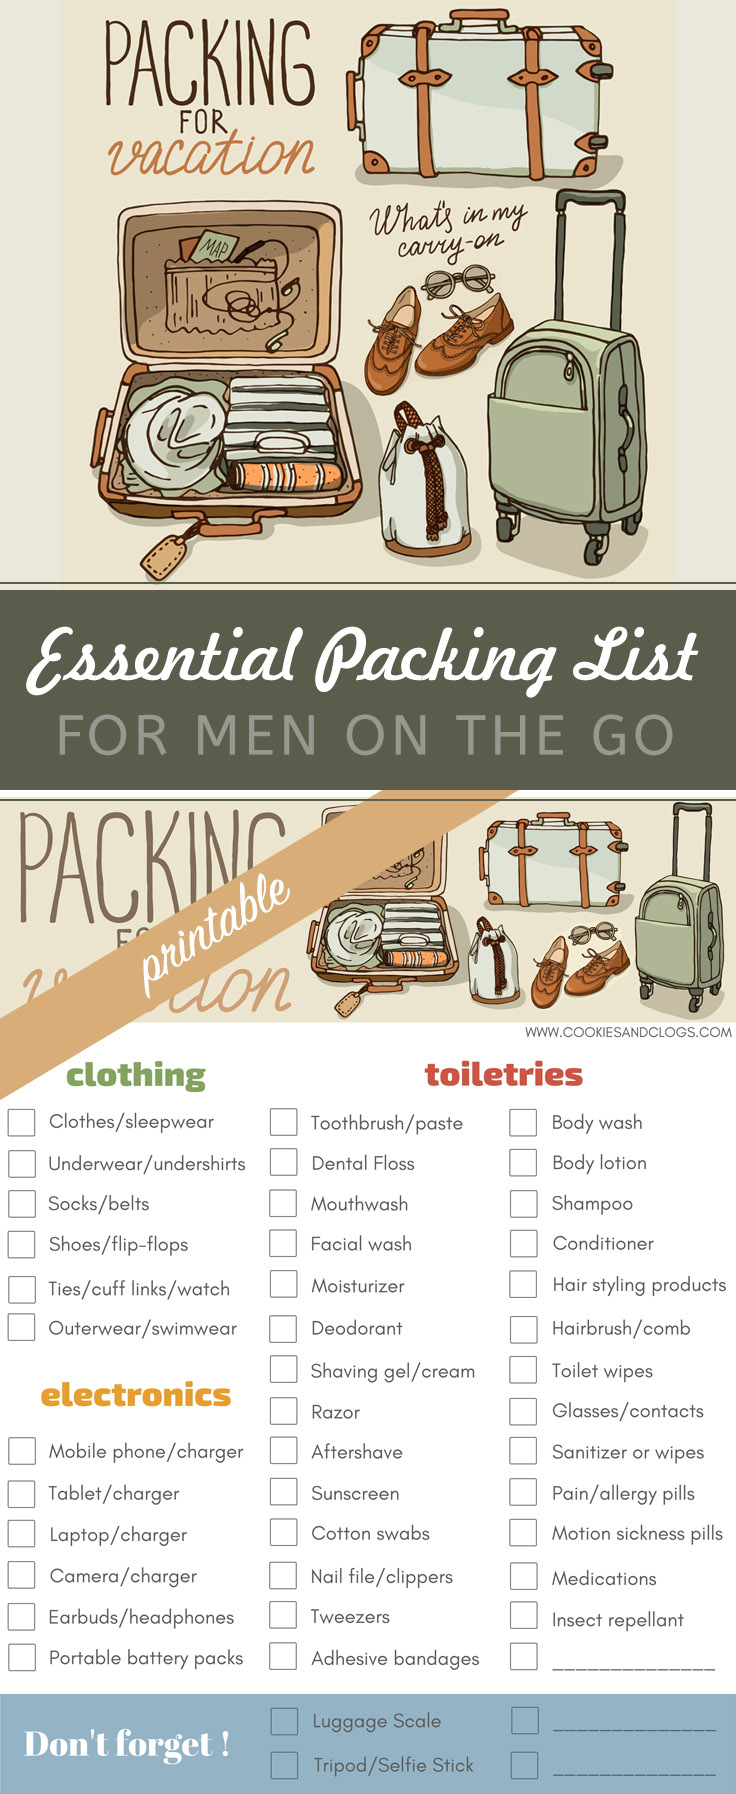 https://www.cookiesandclogs.com/wp-content/uploads/2019/06/packing-checklist-men-02.jpg